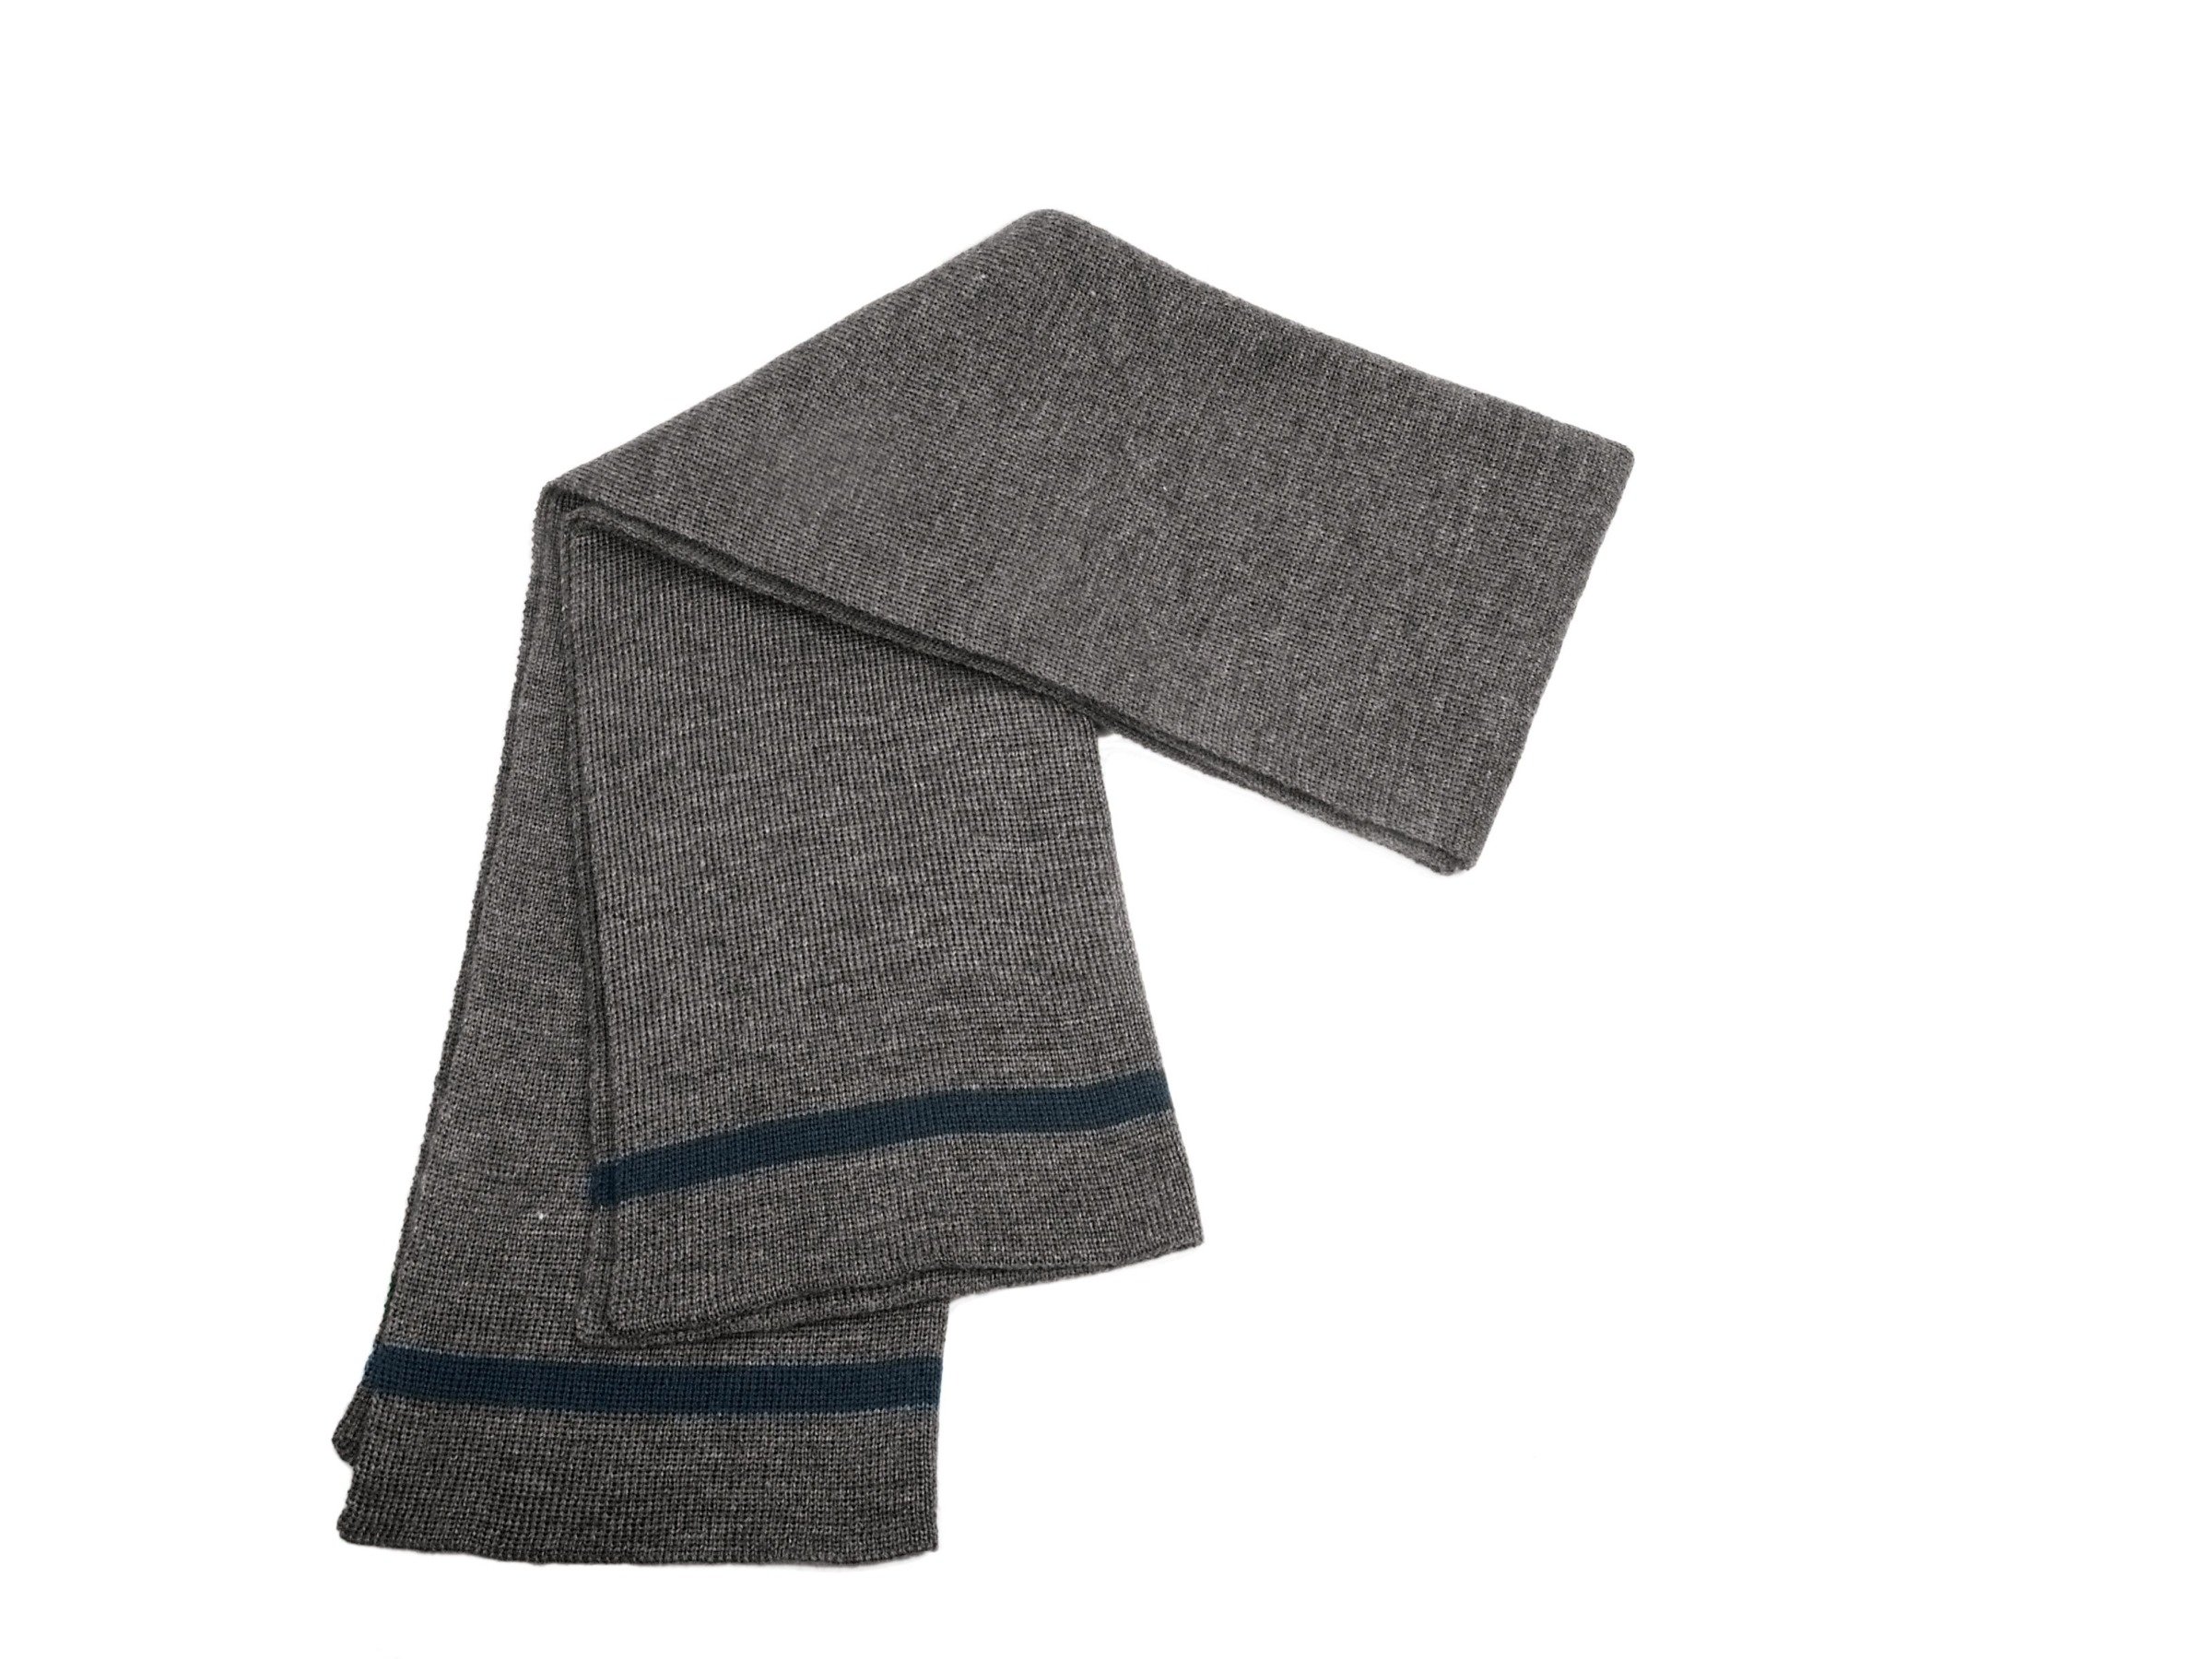 WH/SS woolen scarf with strap - surplus 8,75 € | Nestof.pl